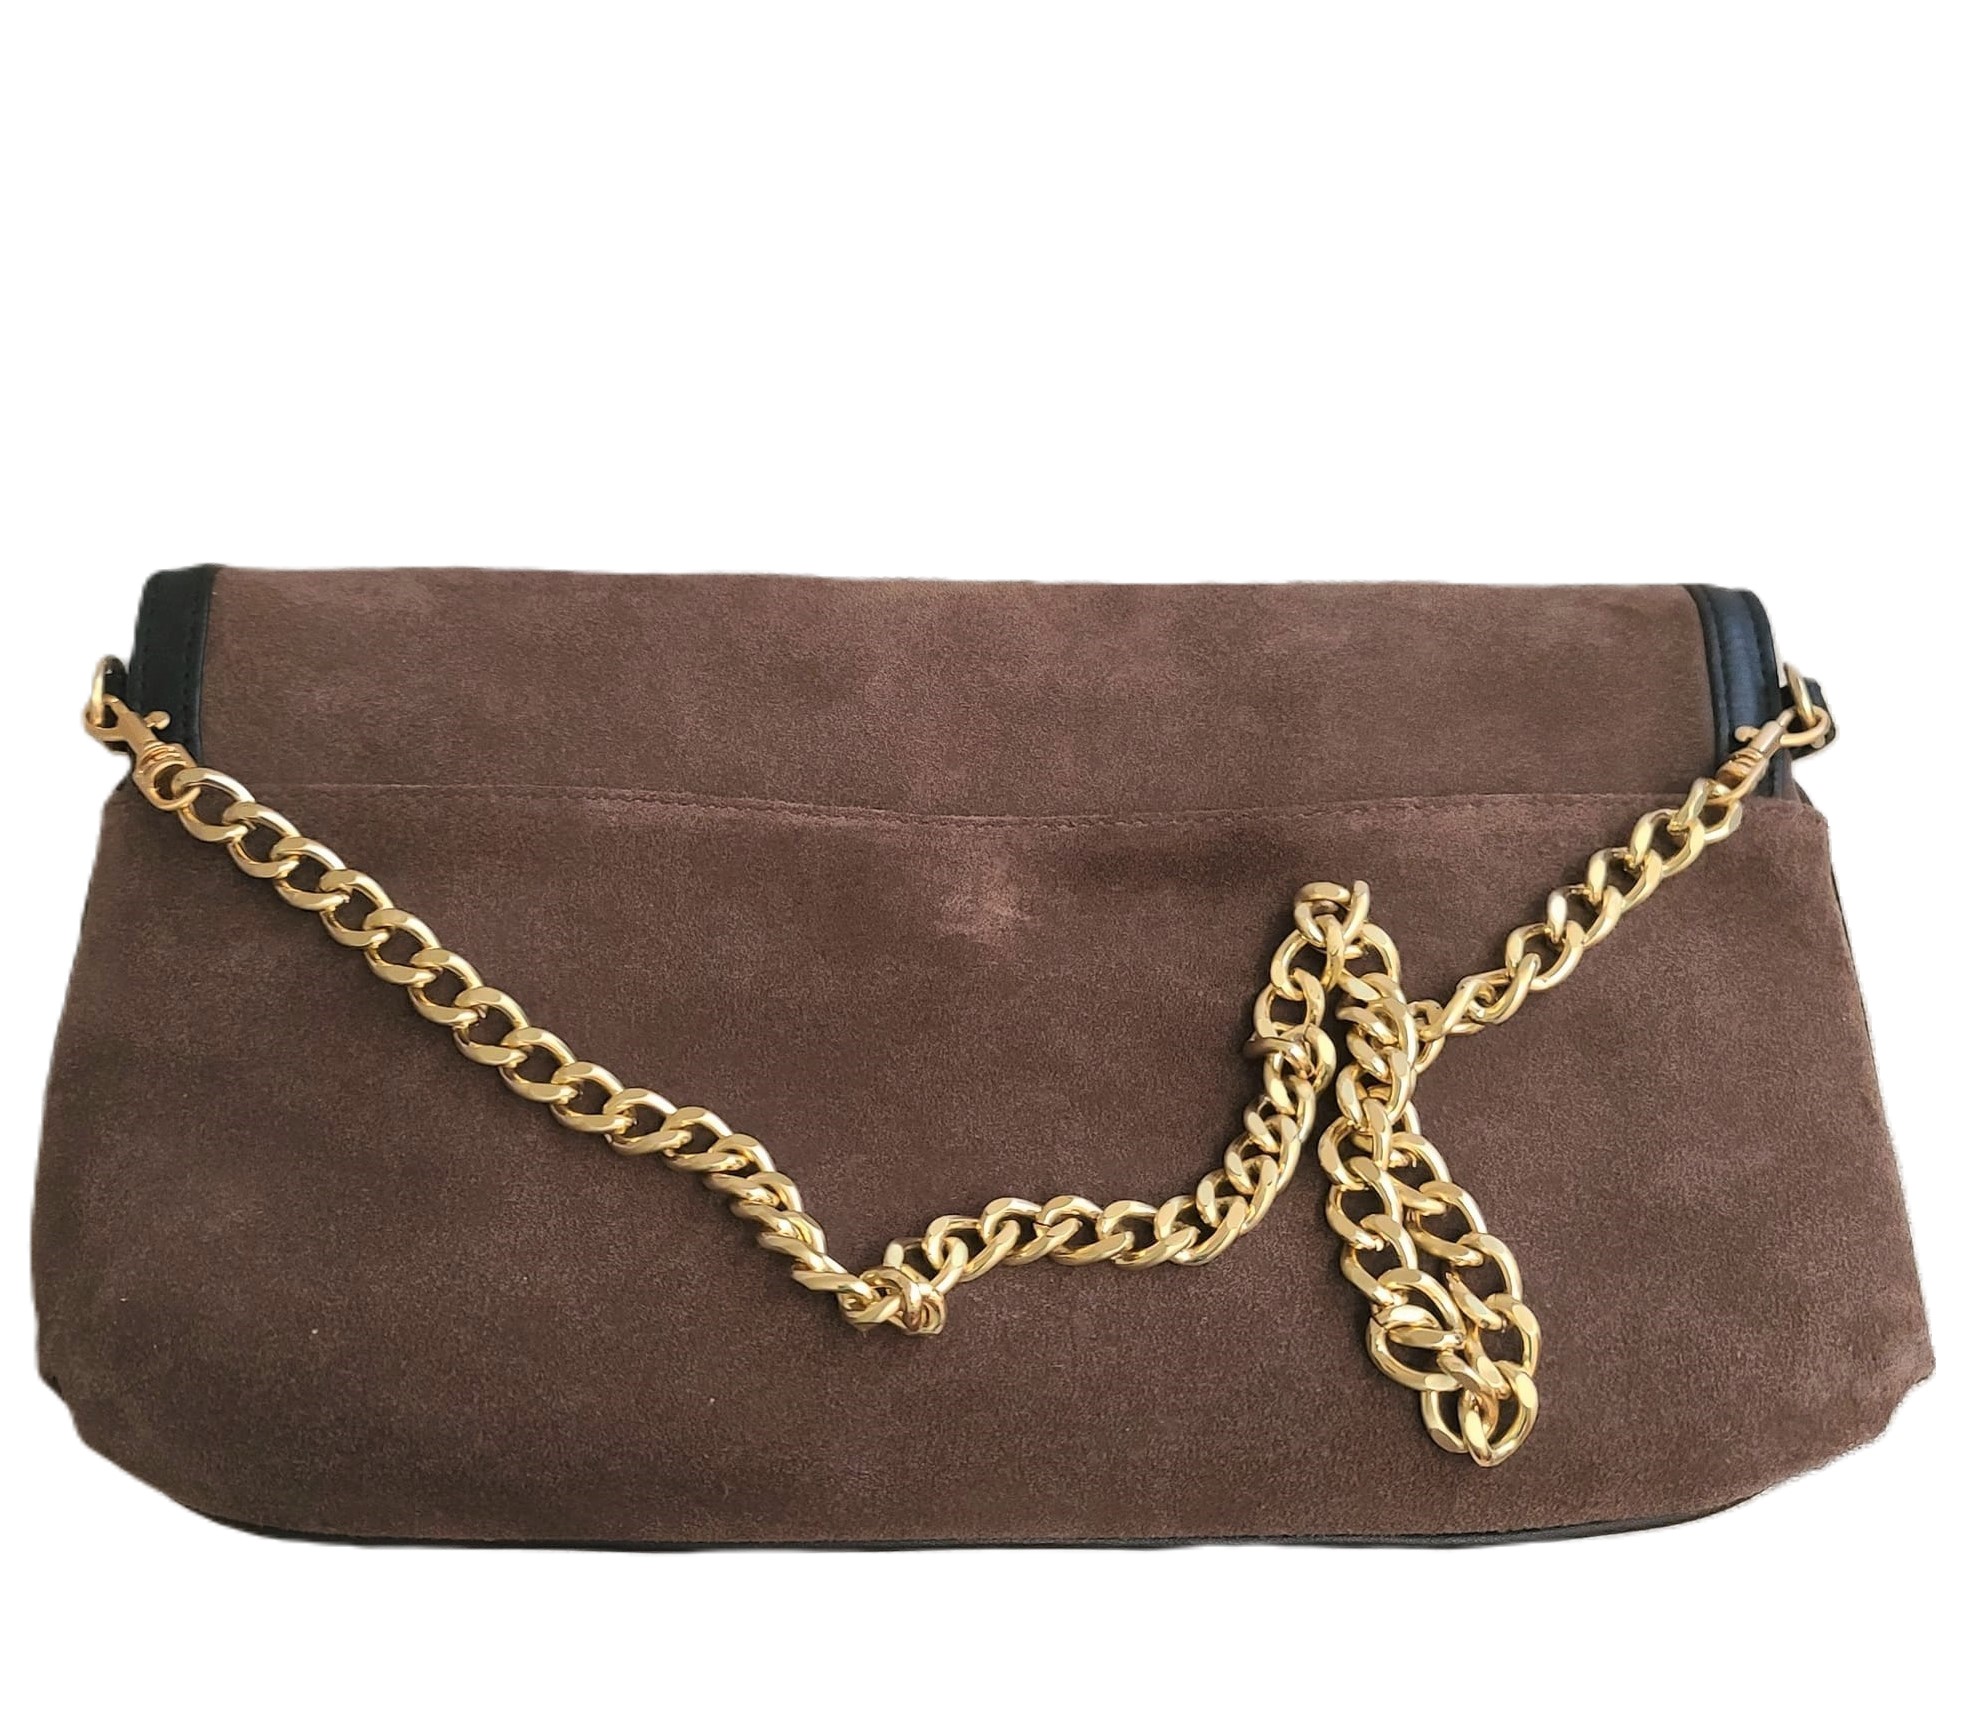 Elaine Turner brown suede handbag with gold chain strap